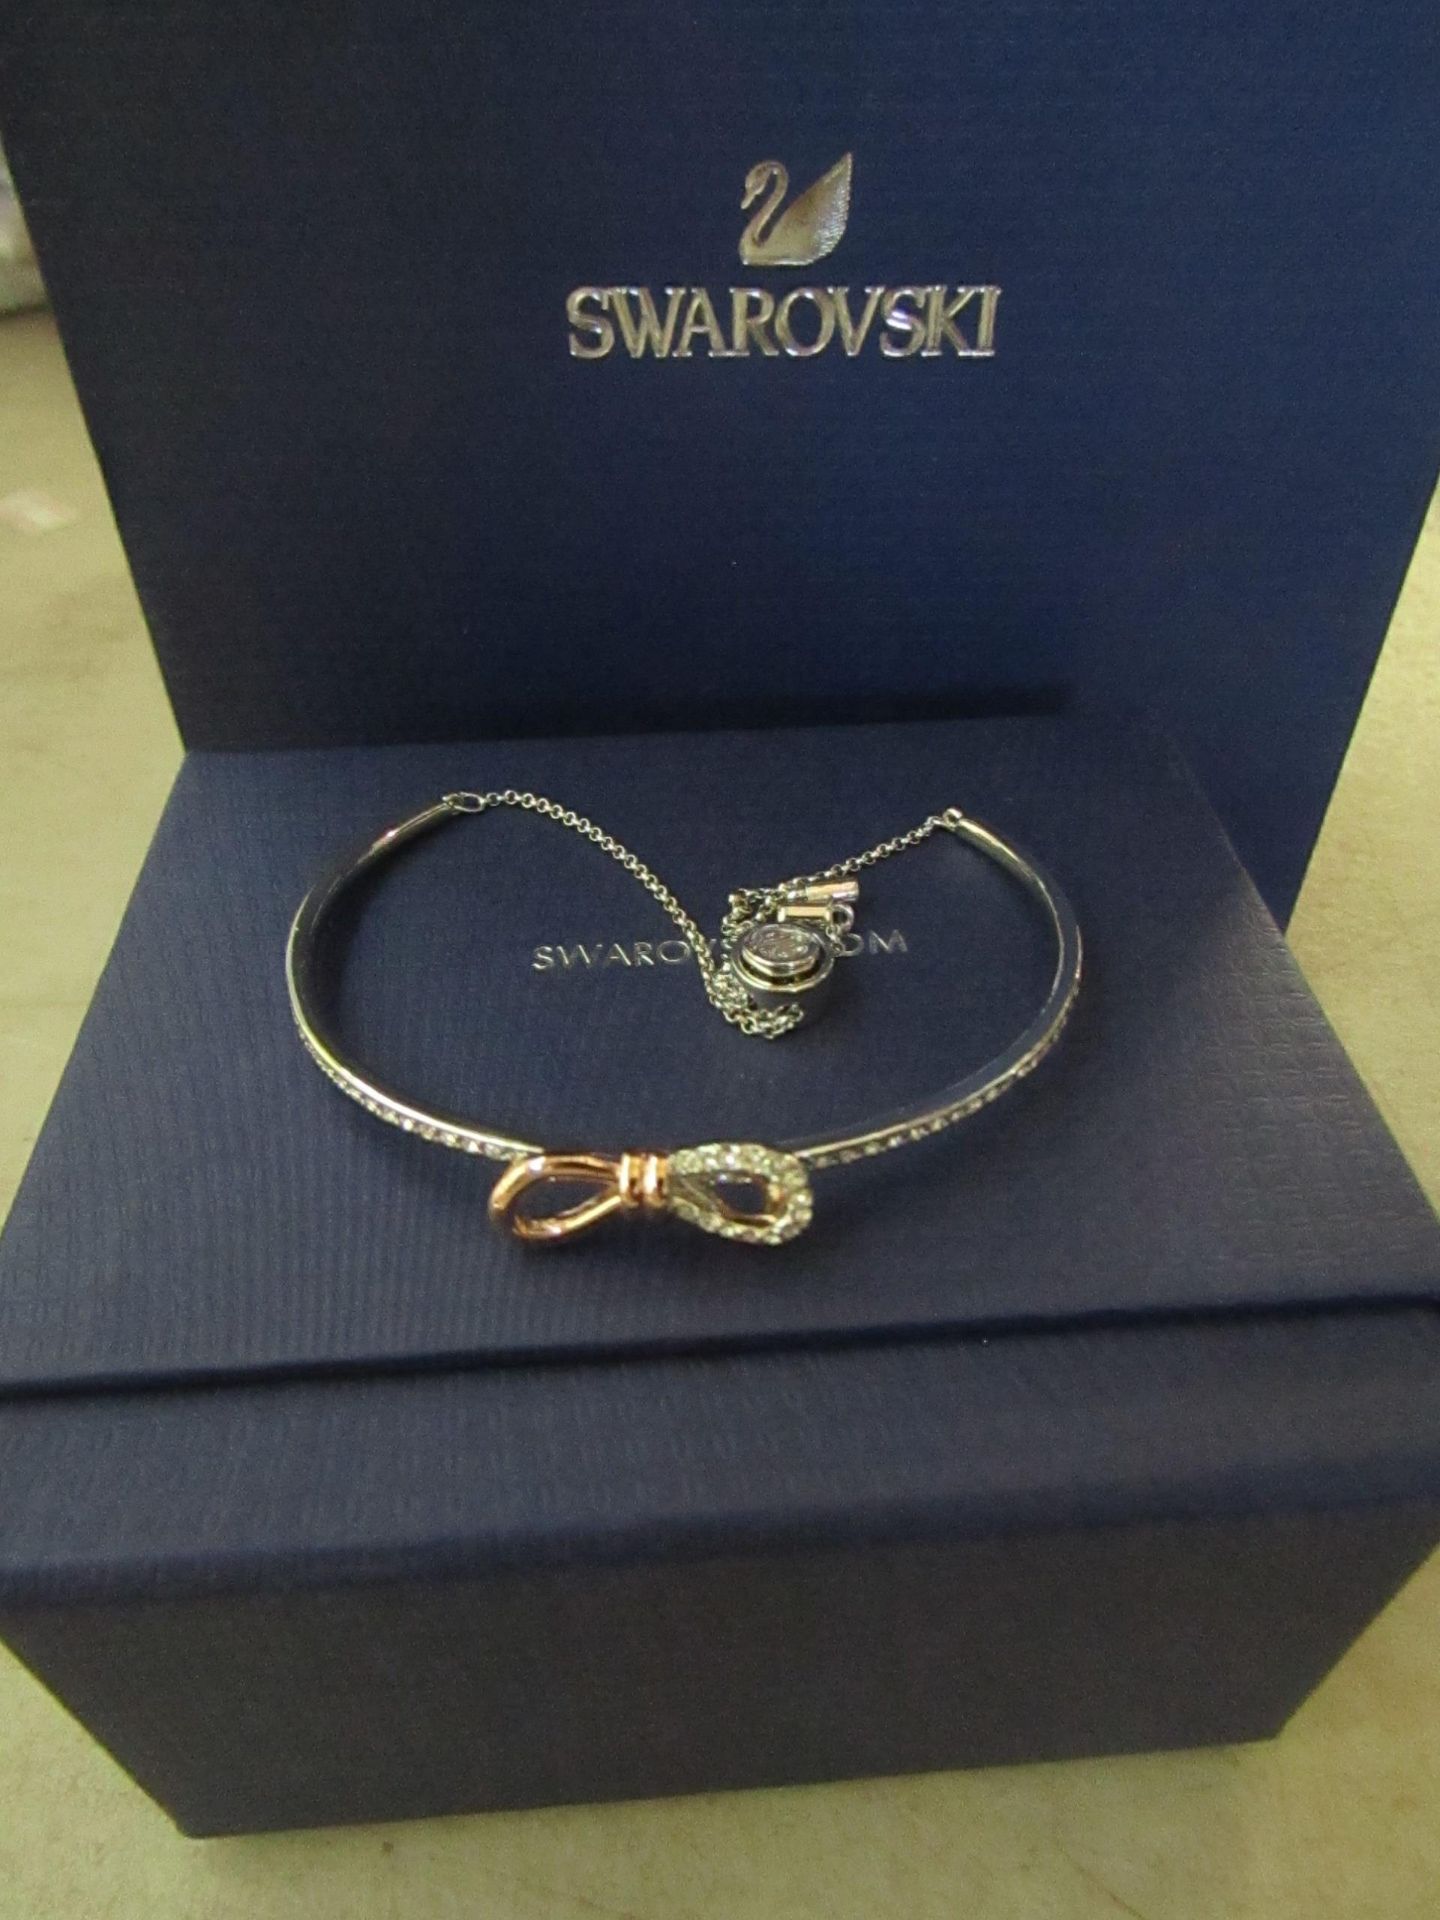 Swarovski Lifelong Bow Crystal and mixed metal bracelet, new with presentation box and gift bag